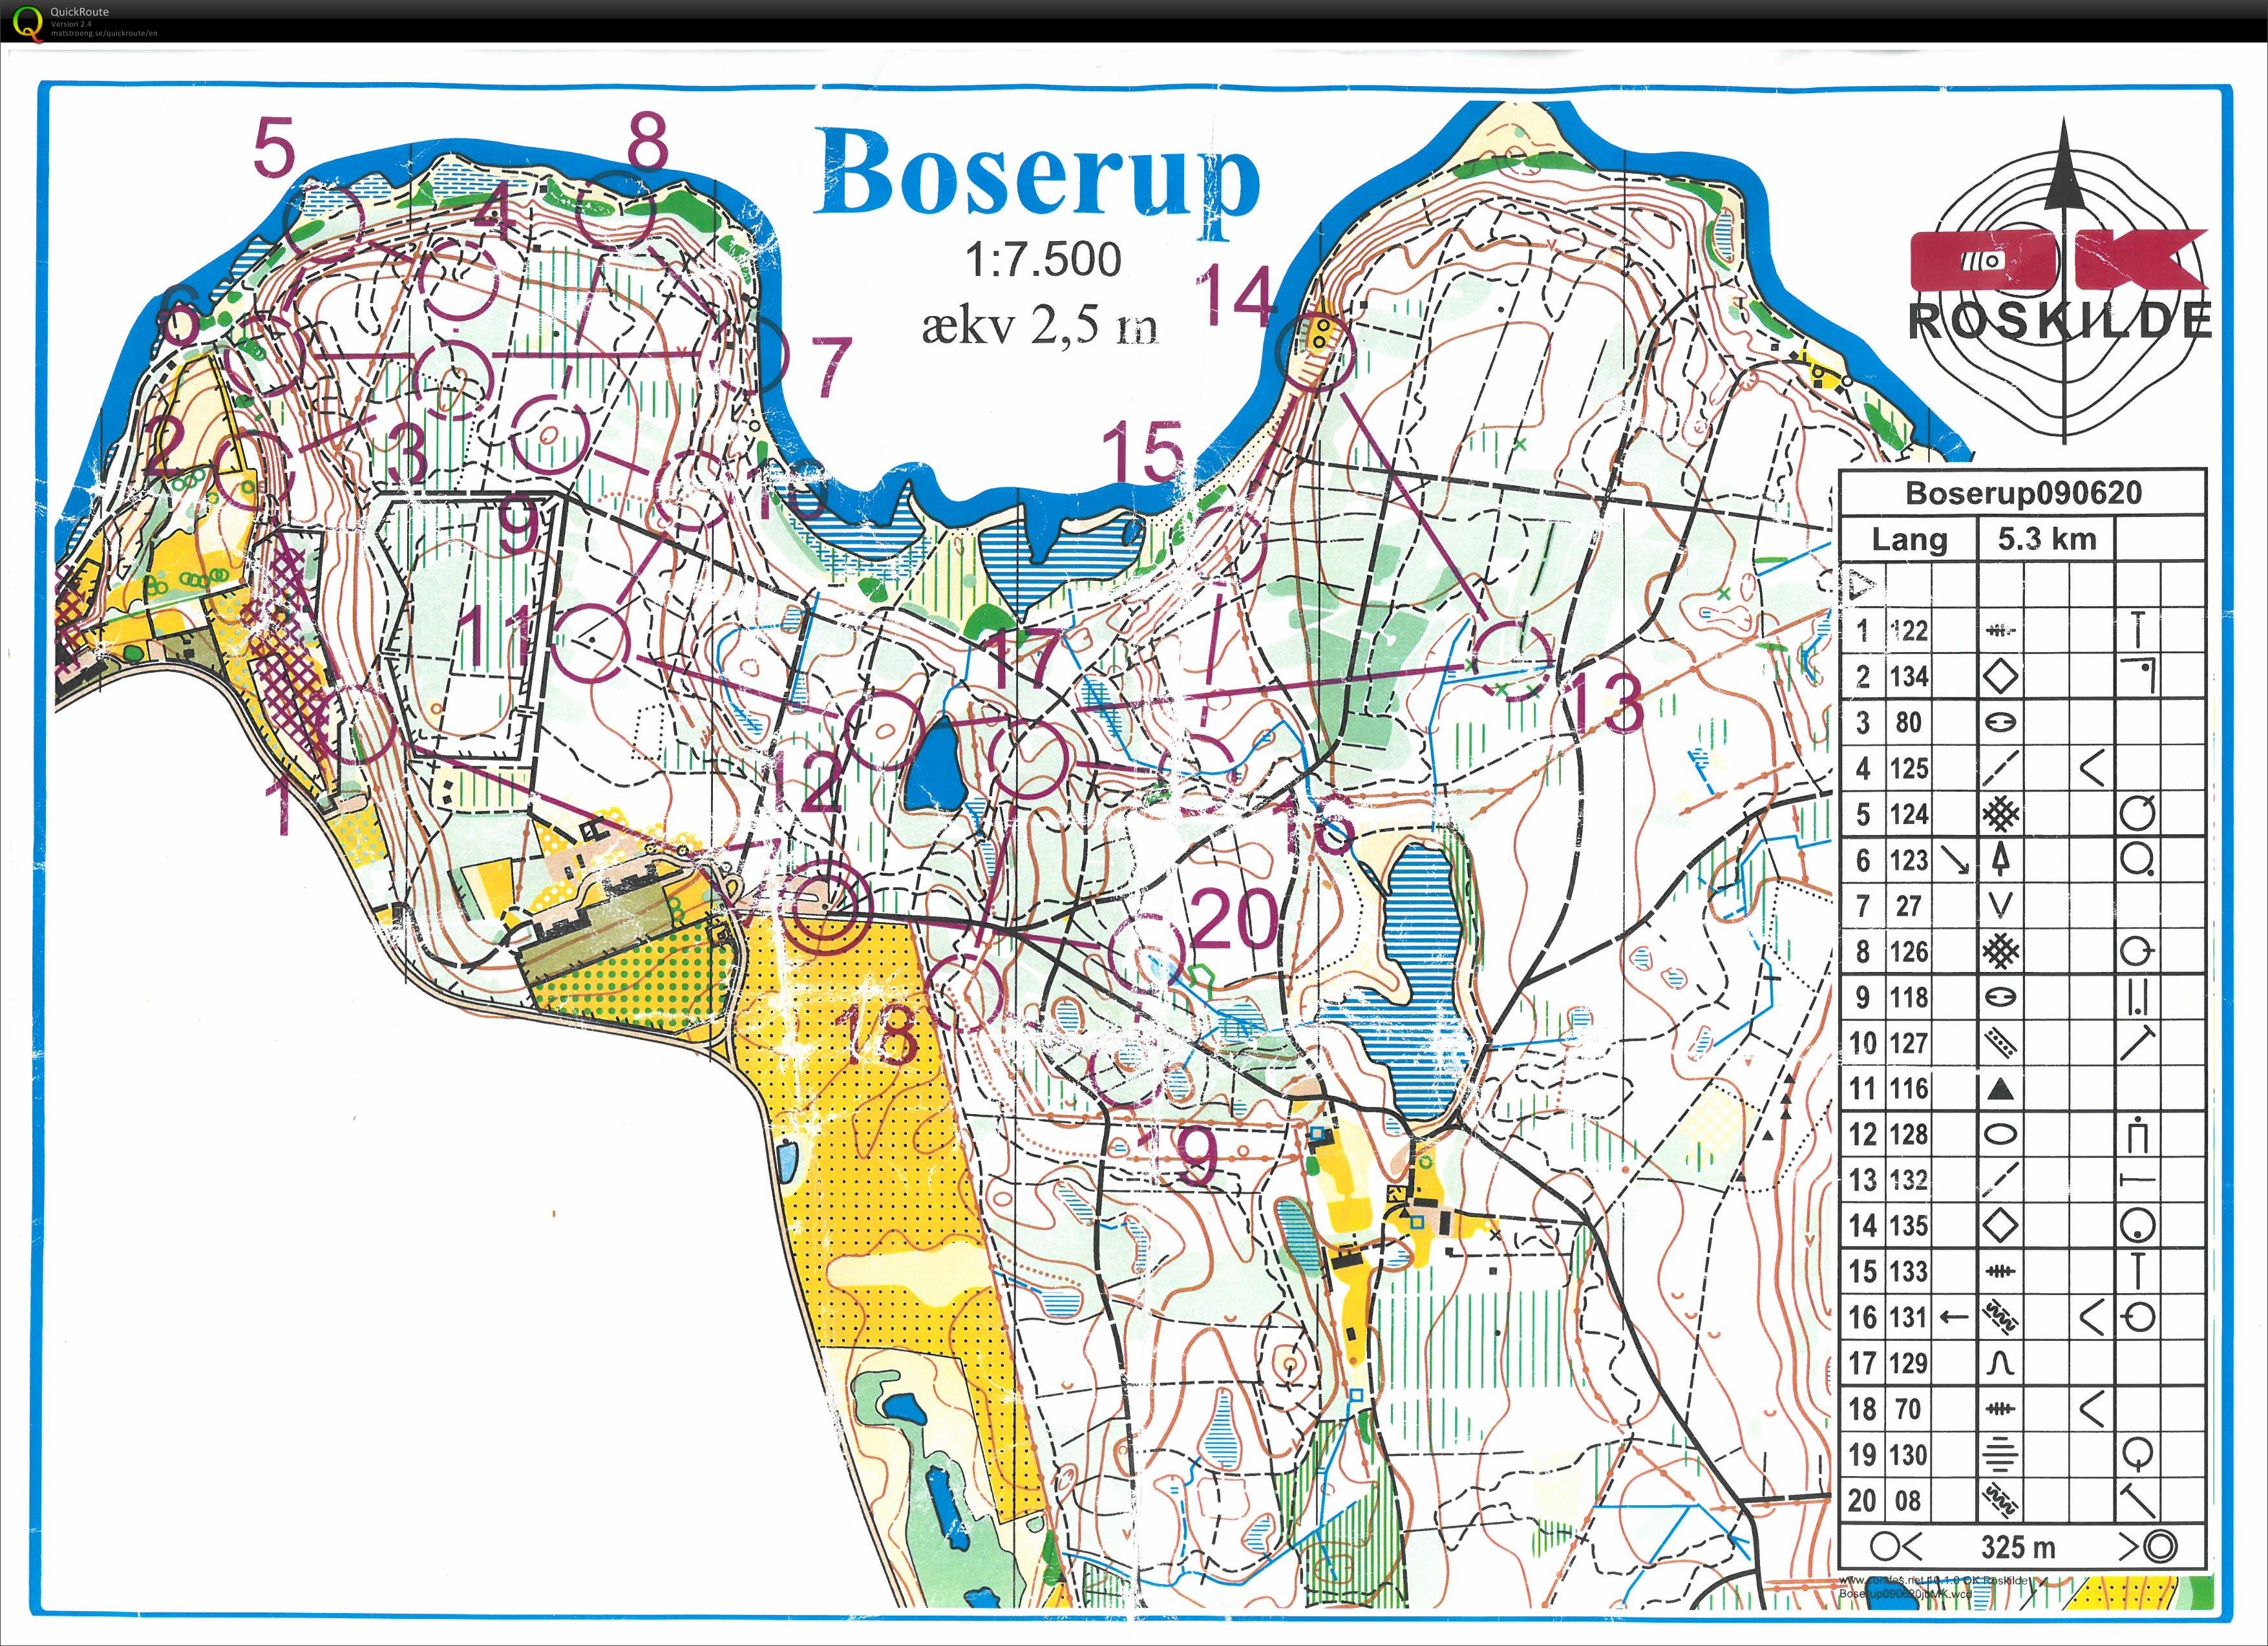 Tirsdagstræning i Boserup (09/06/2020)